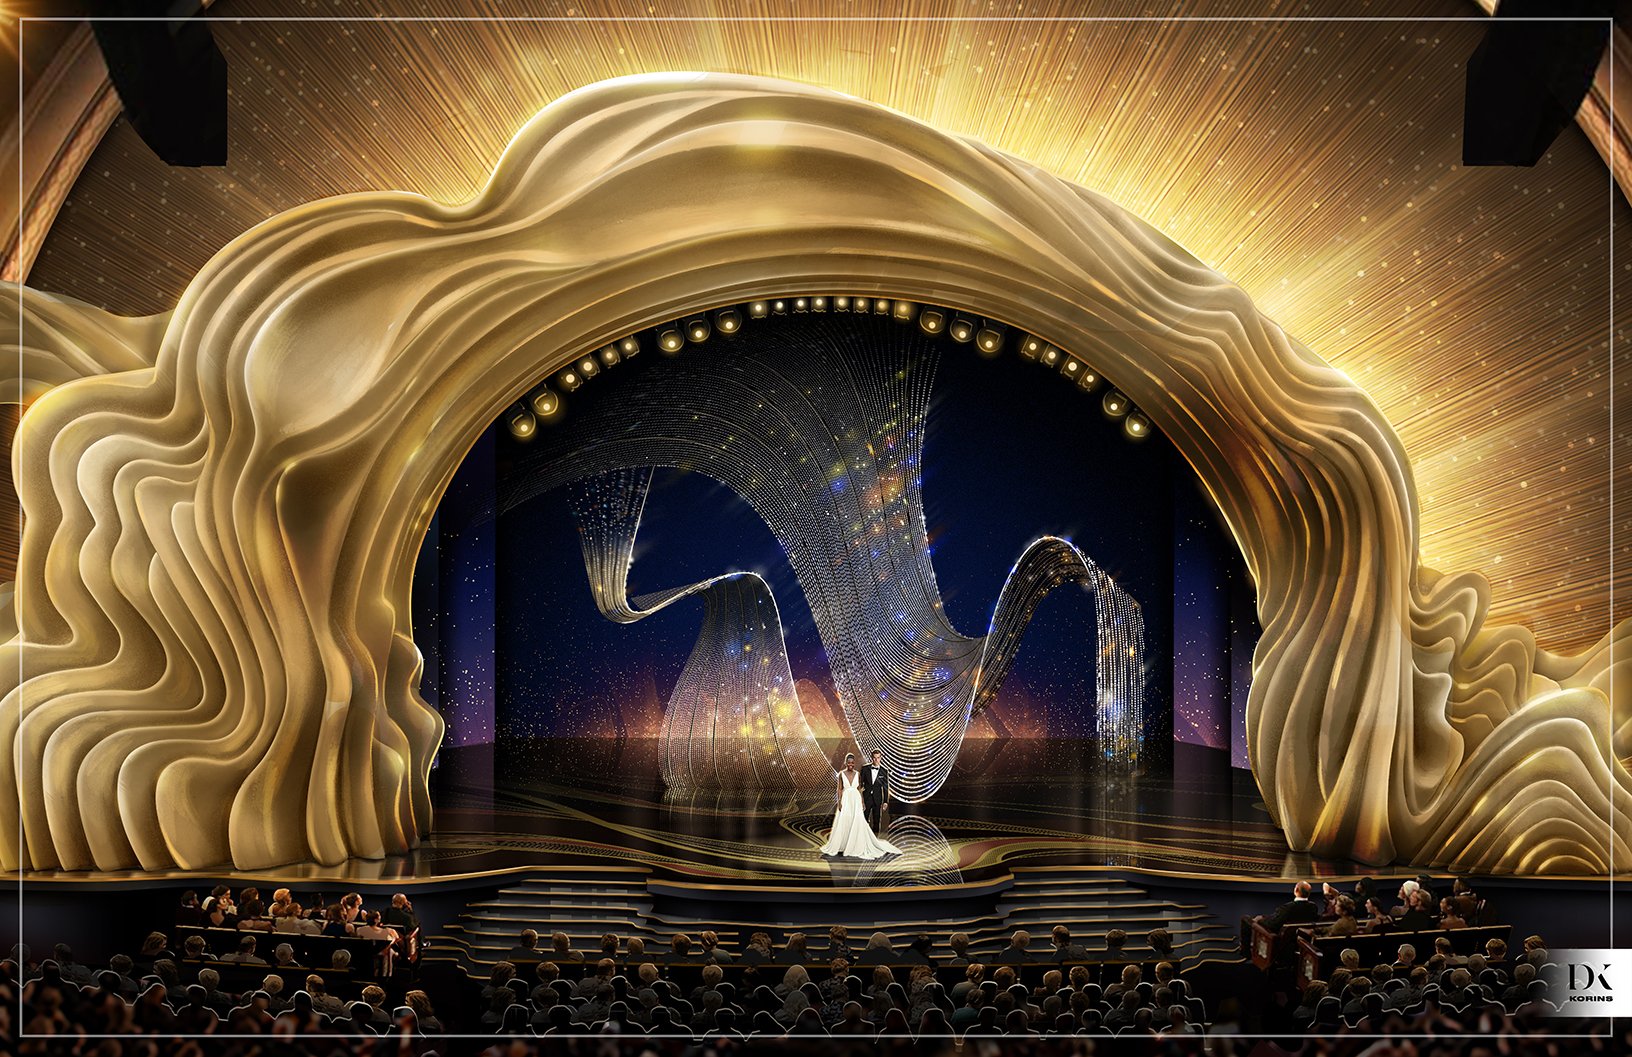 2019 Oscars stage design rendering